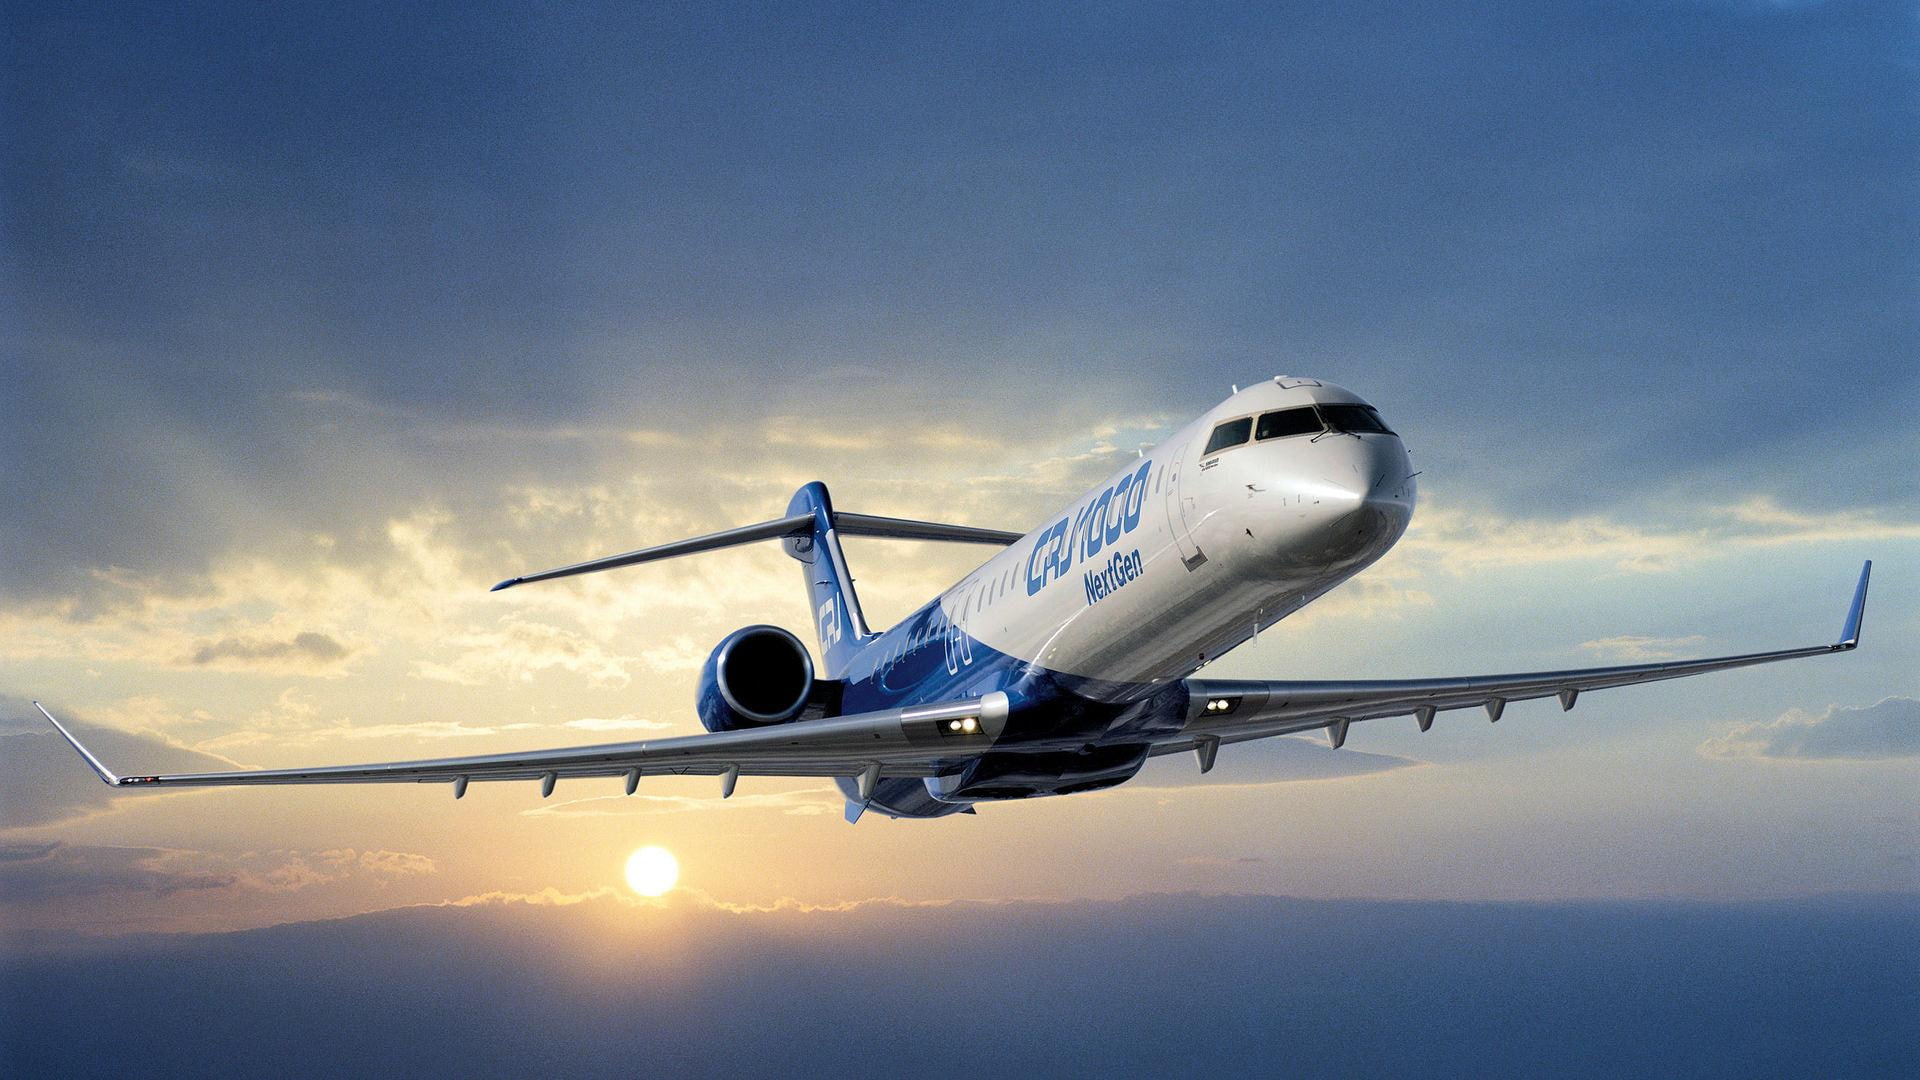 Bombardier Crj-1000 Next Gen, white and blue steel plane, airplane